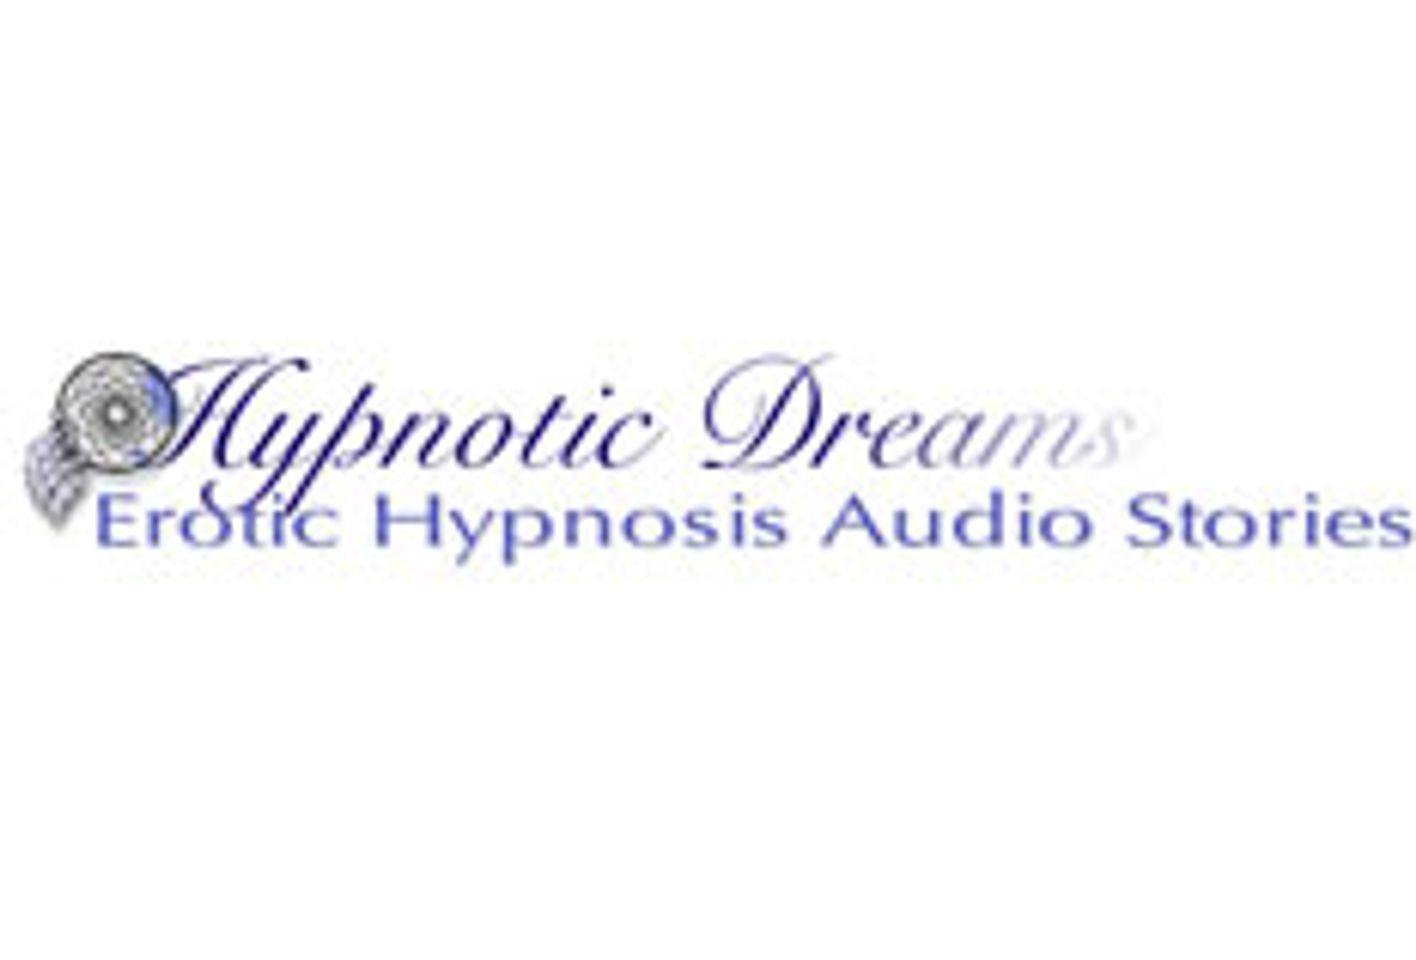 Hypnotic Dreams Owner Daniel A. Discusses Erotic Audio Books on Playboy's 'Night Calls'